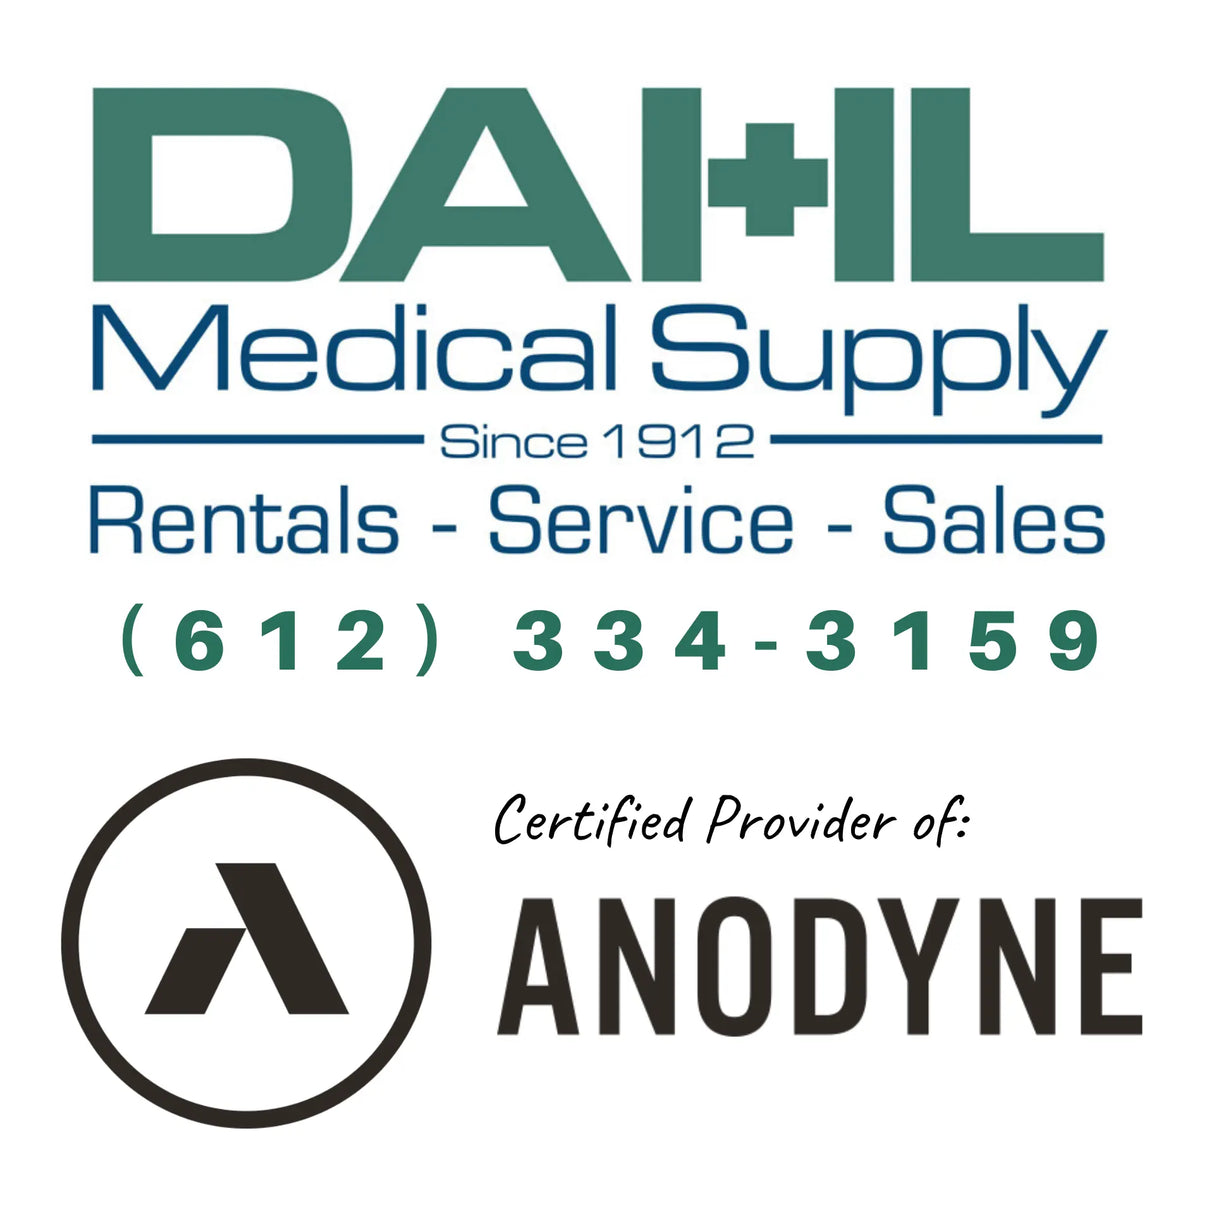 Dahl Medical Supply (612) 334-3159 - Certified Provider of Anodyne Footwear